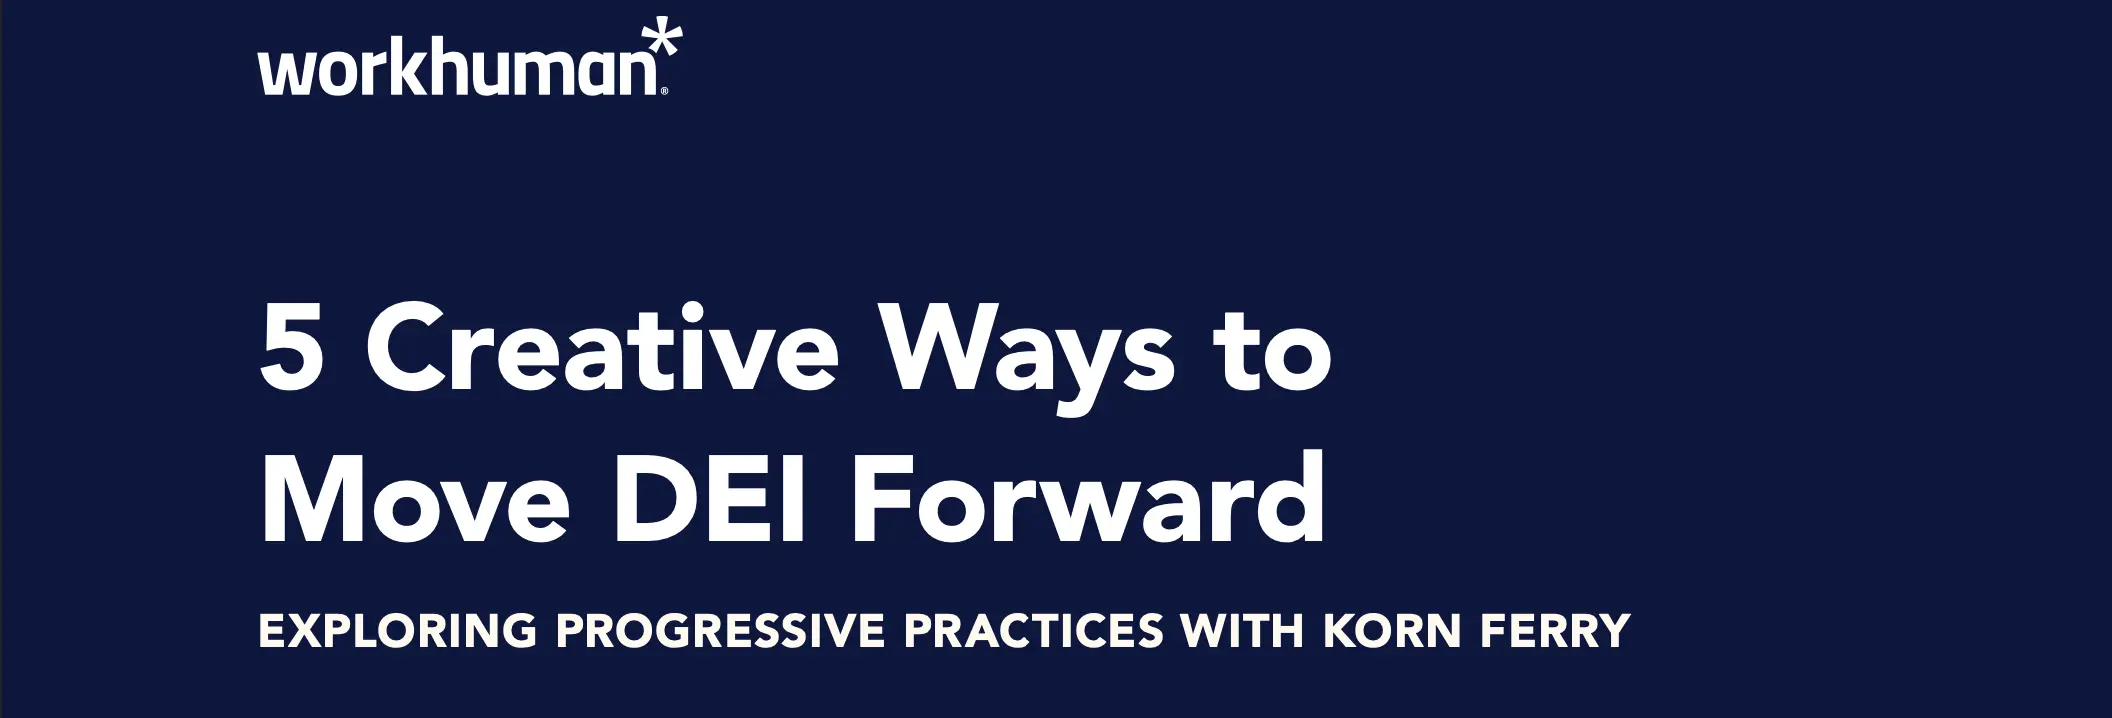 5 Creative Ways to Move DEI Forward_FeatureImage